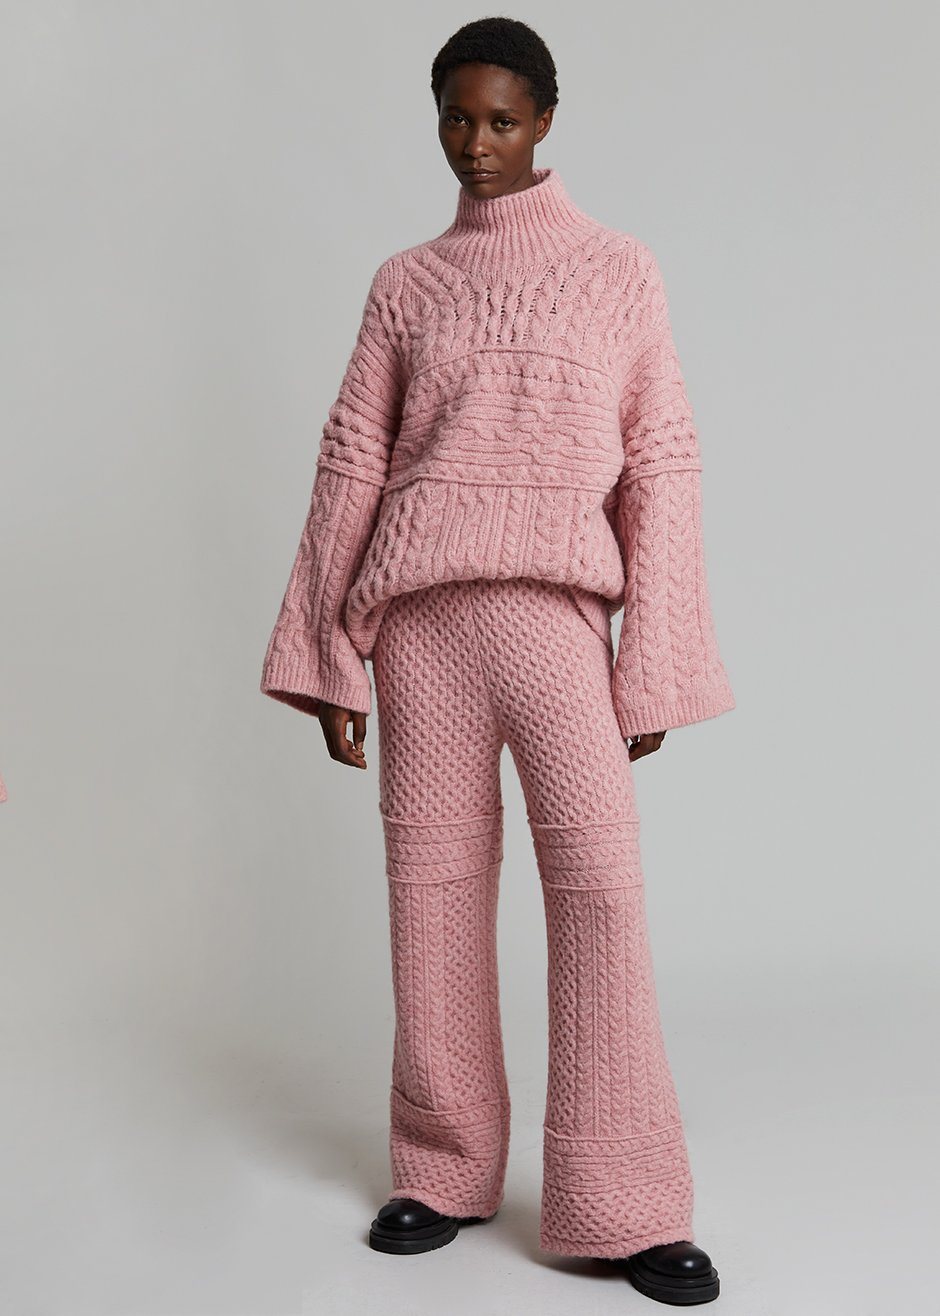 Nanushka Fina Cable Knit Pants - Pink